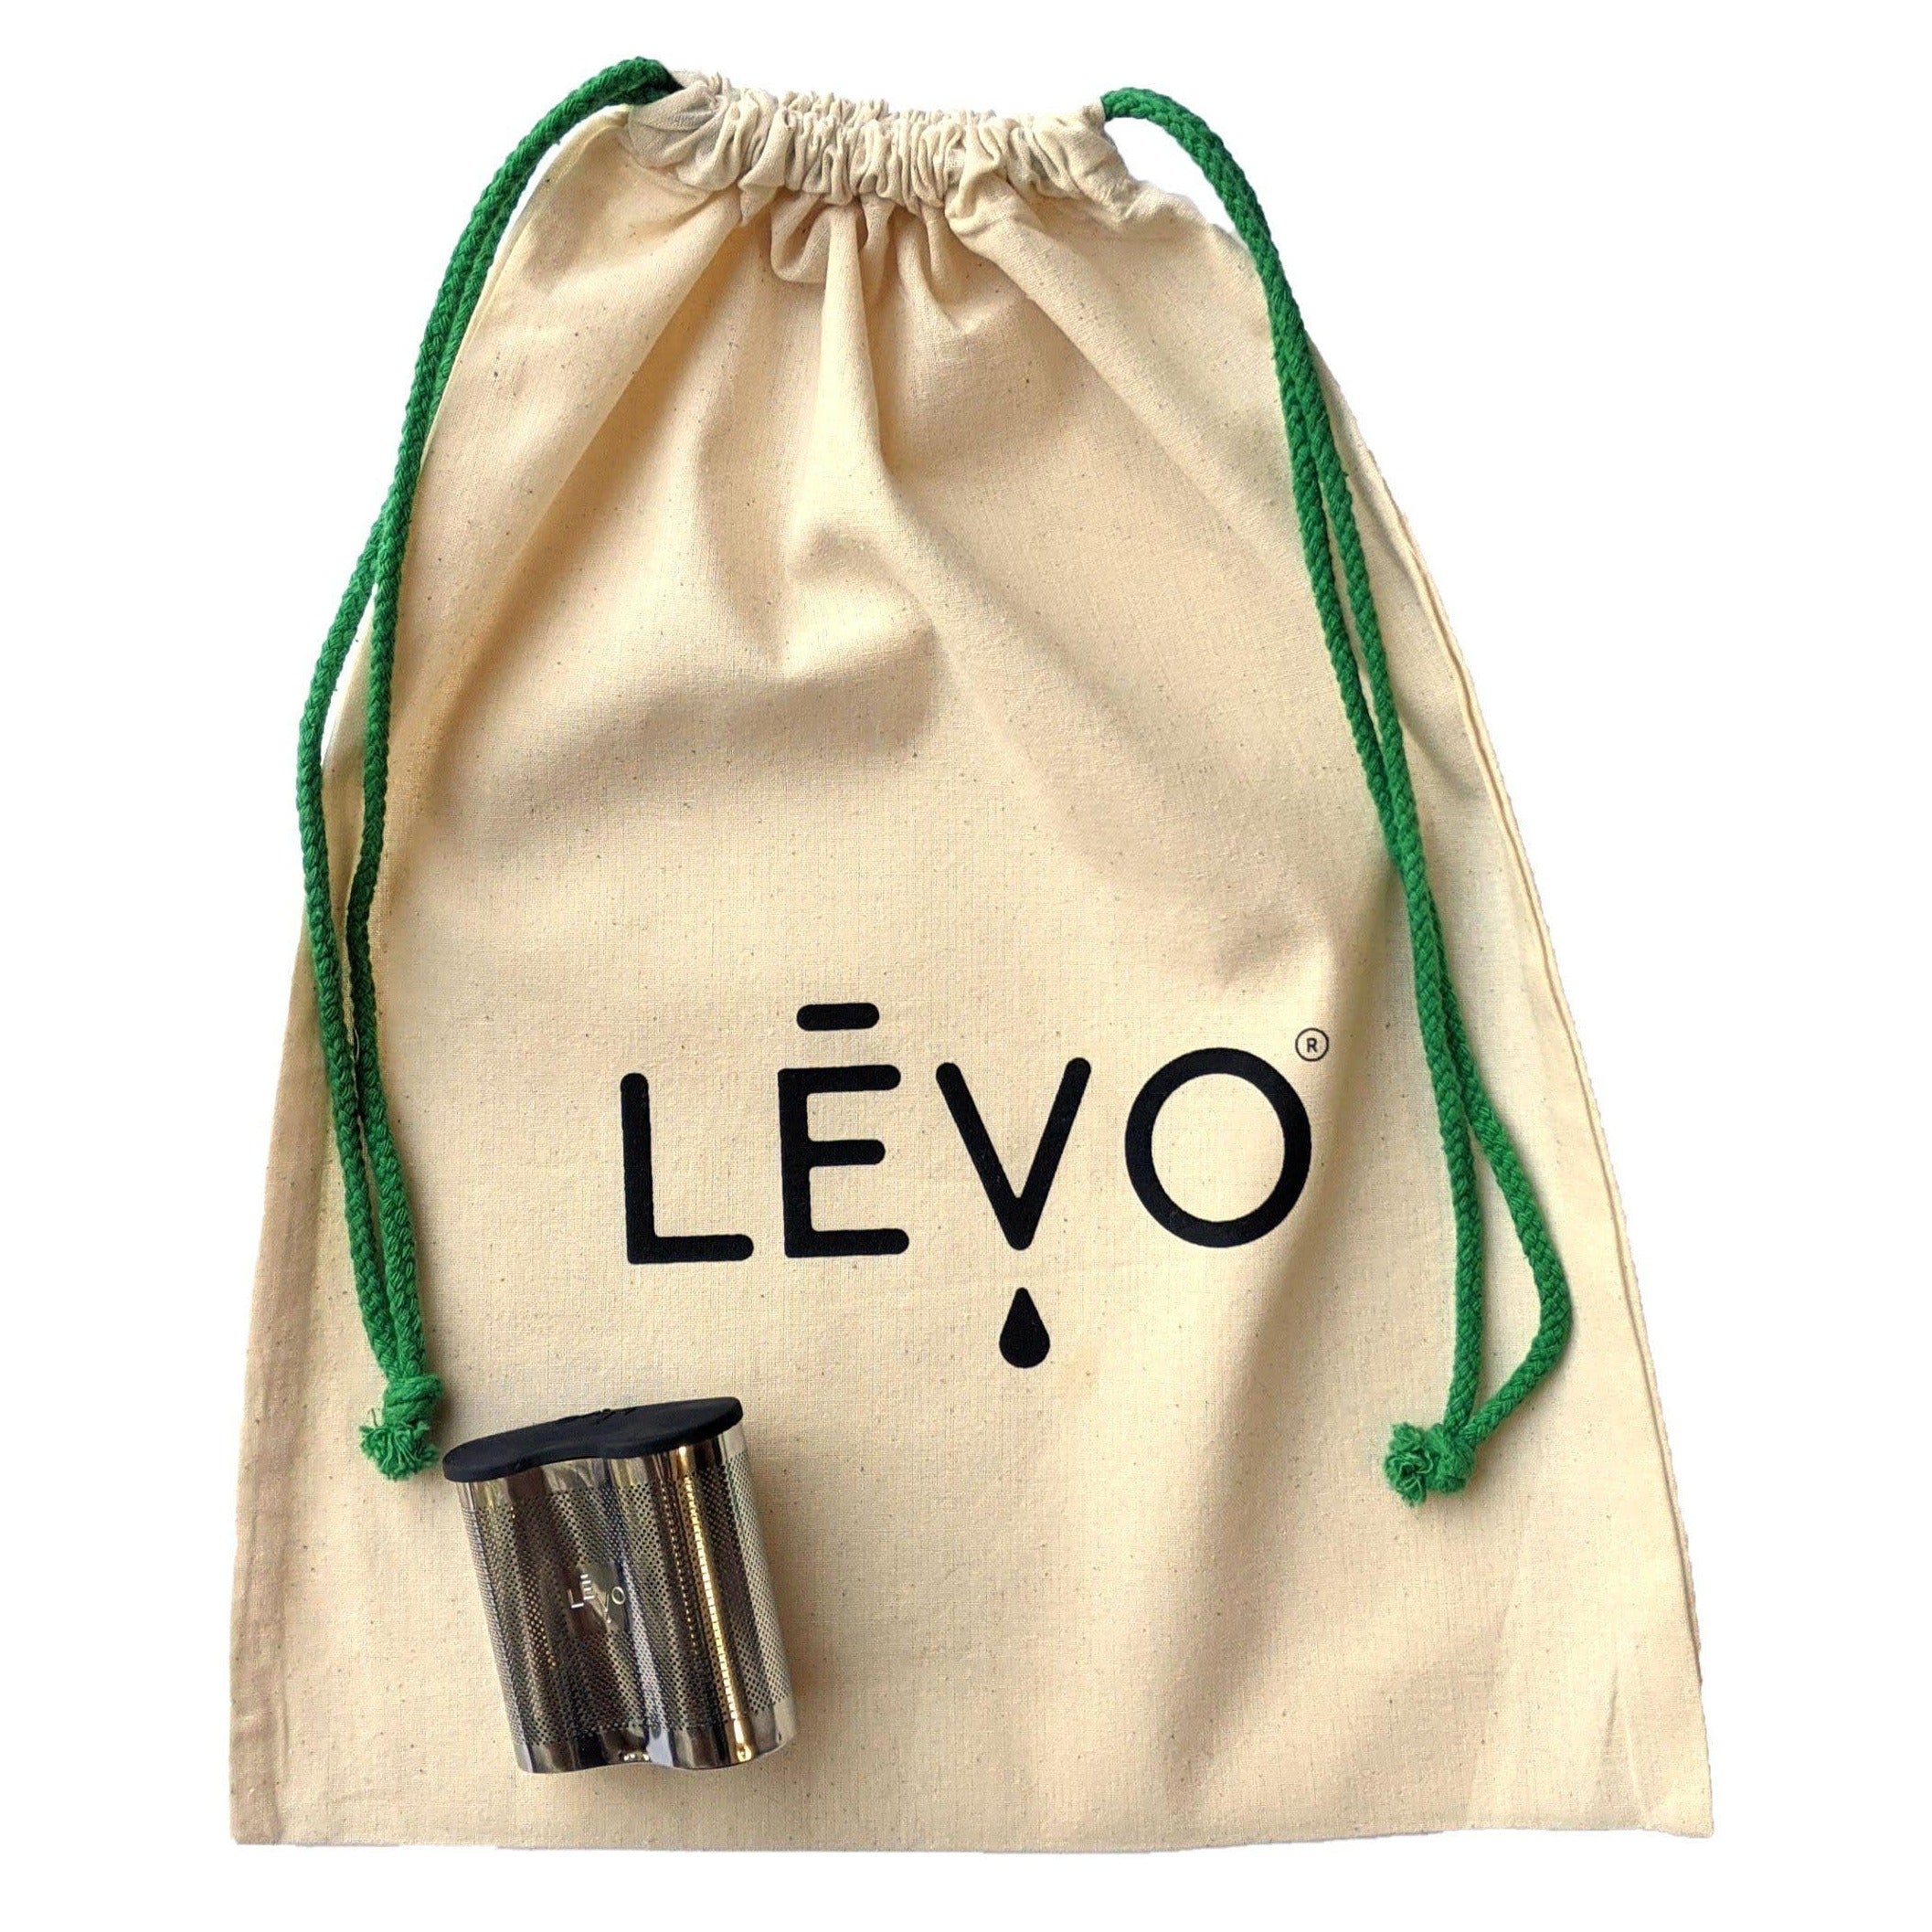 LEVO drawstring bag with pod for size comparison